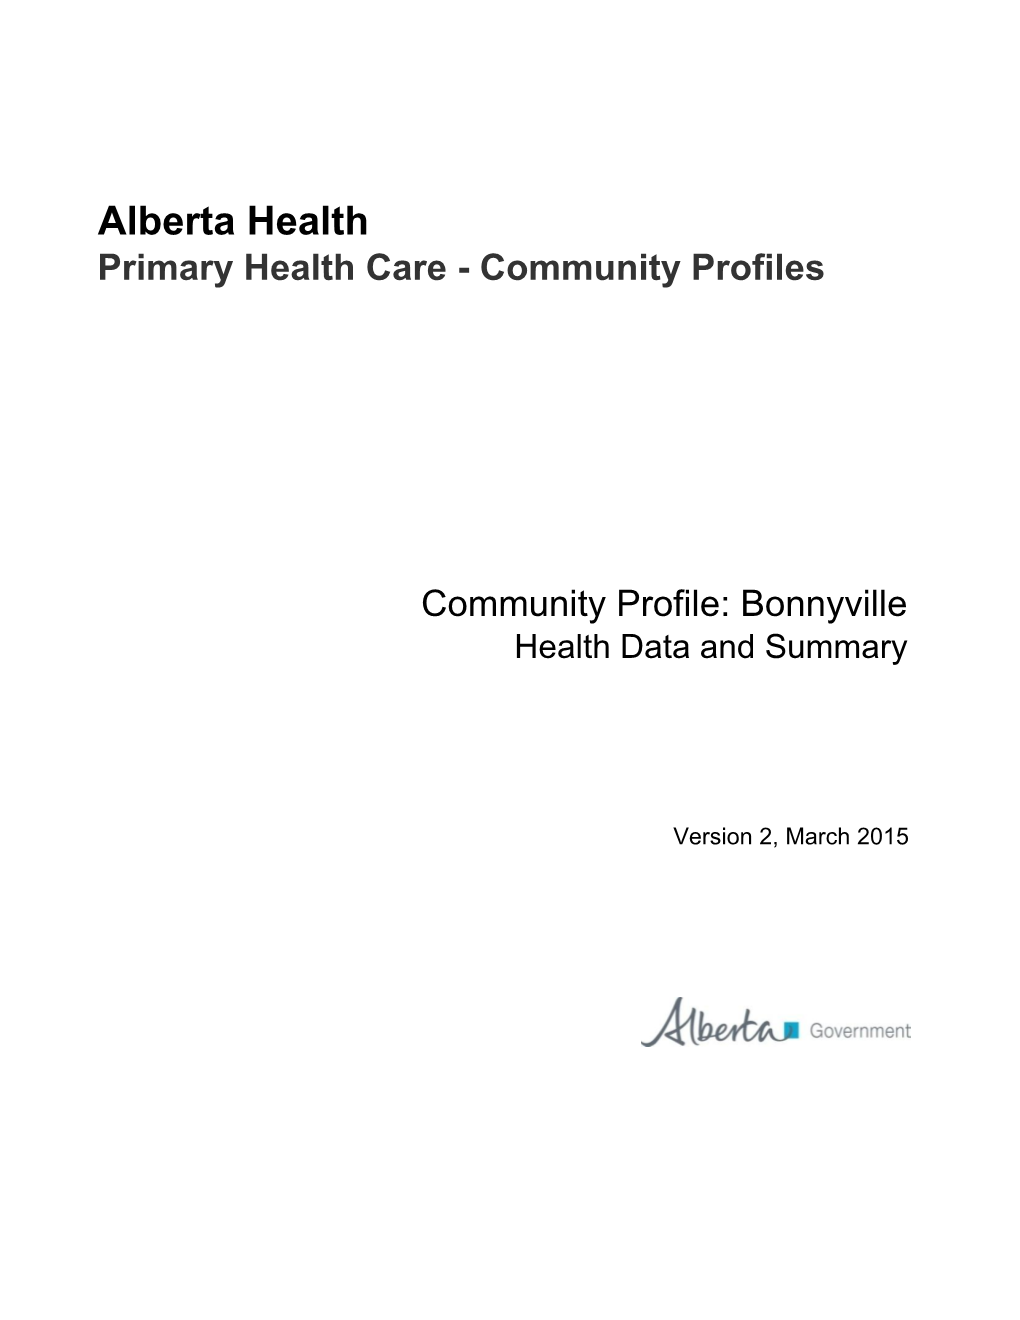 Bonnyville Health Data and Summary